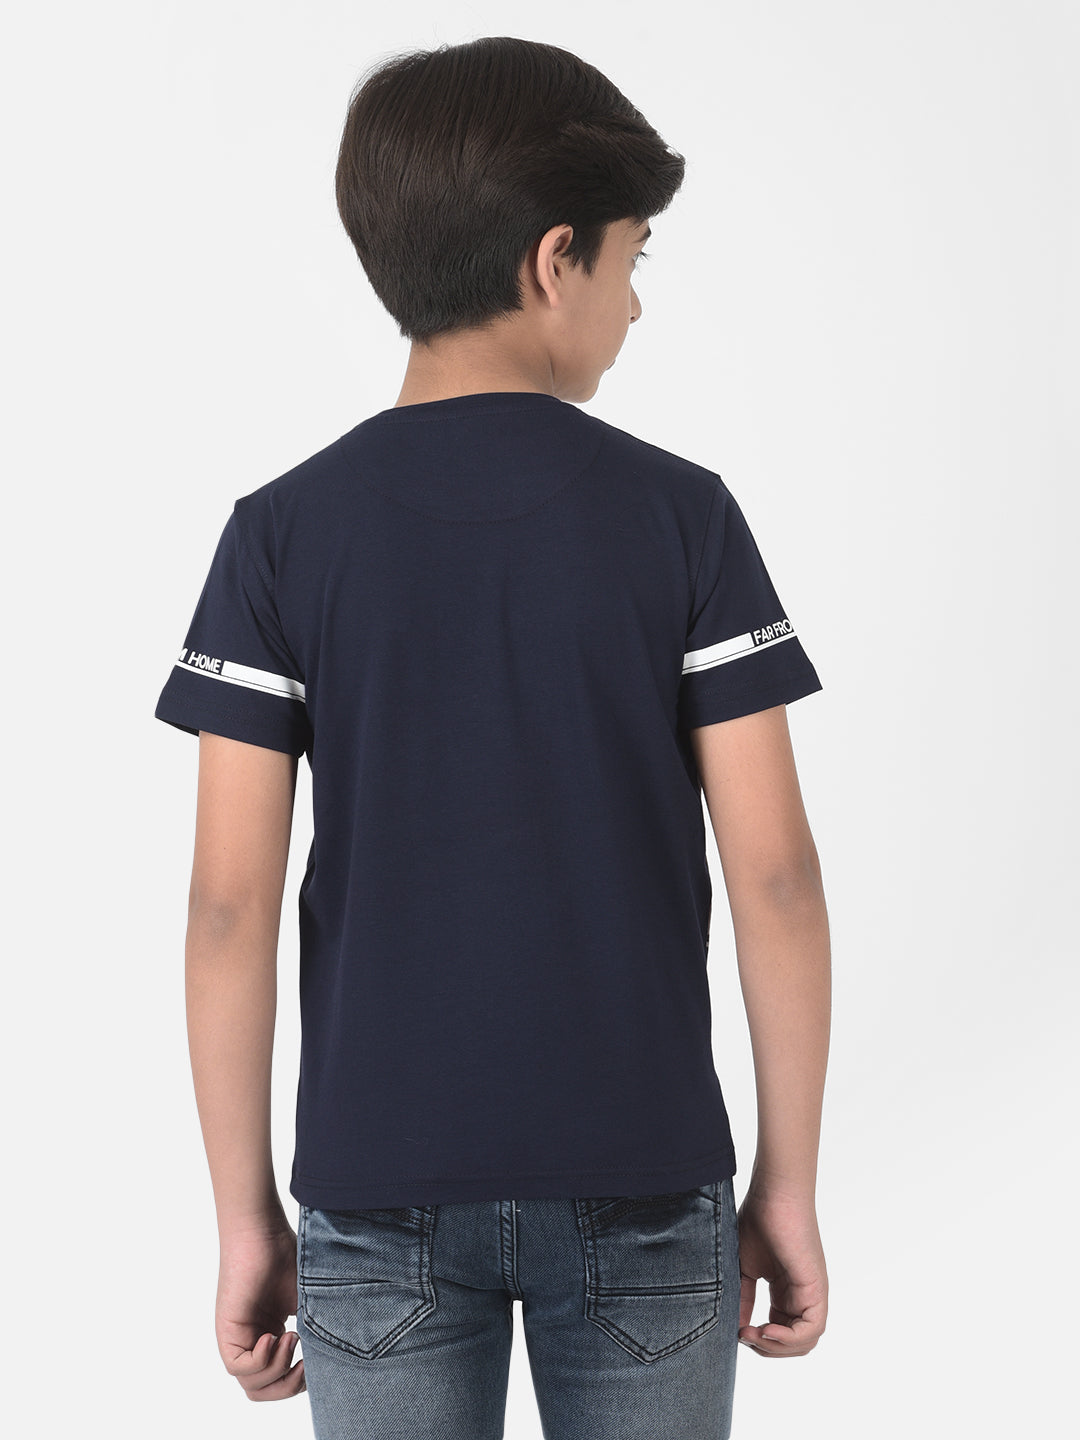 Navy Blue Printed Round Neck T-shirt - Boys T-Shirts